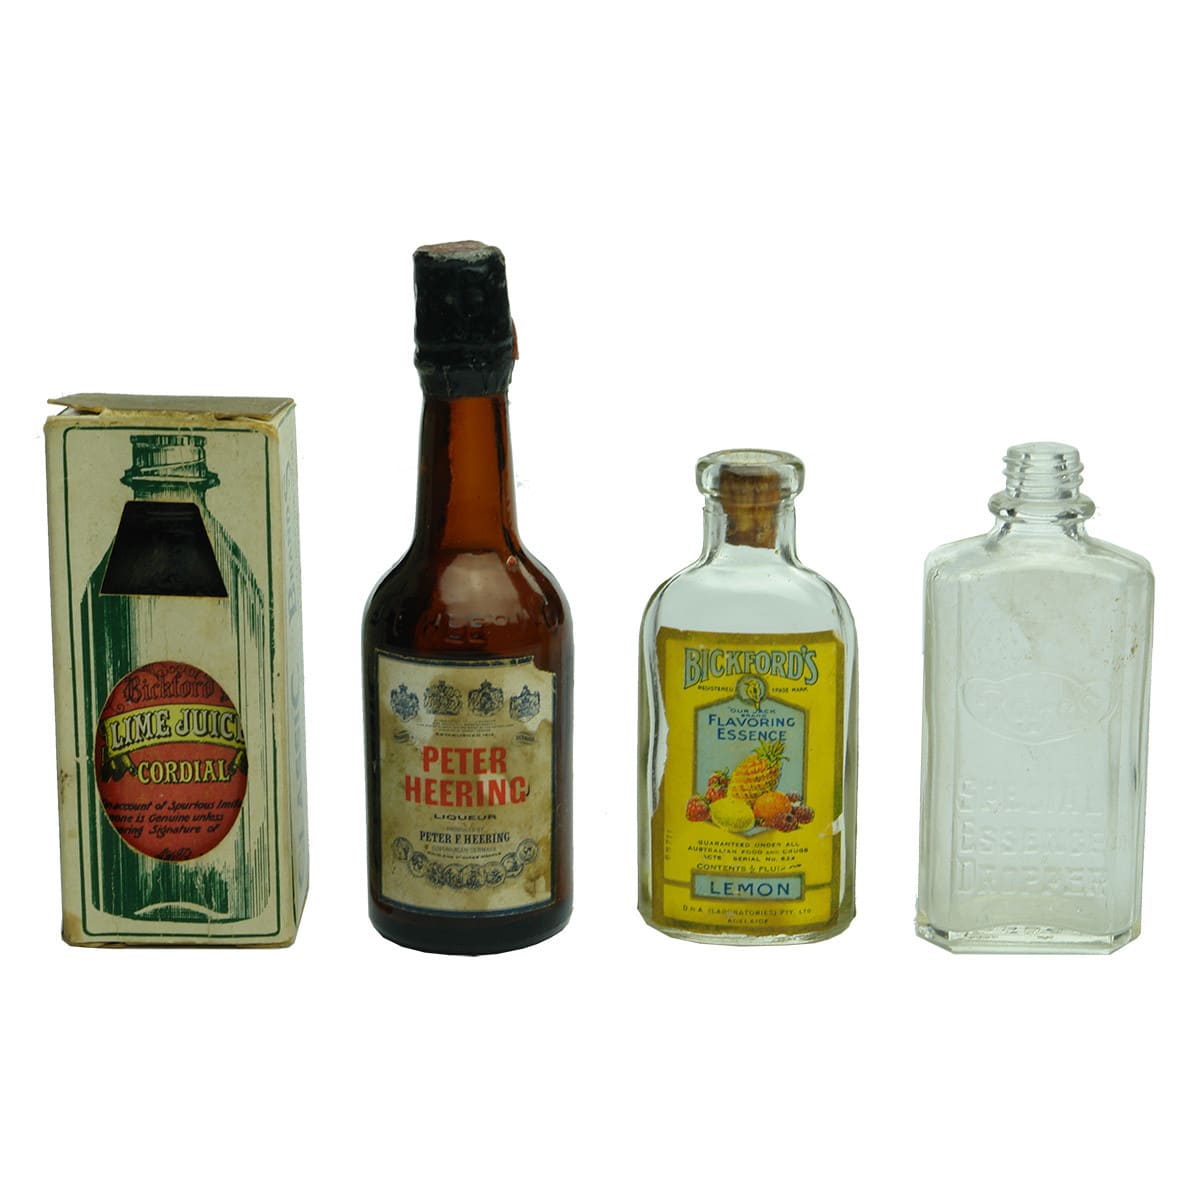 Four Sample/Essence bottles: Peter Heering; Modern Bickfords Lime Juice Cordial; Rolfe's Essence; Bickford's Lemon Essence.